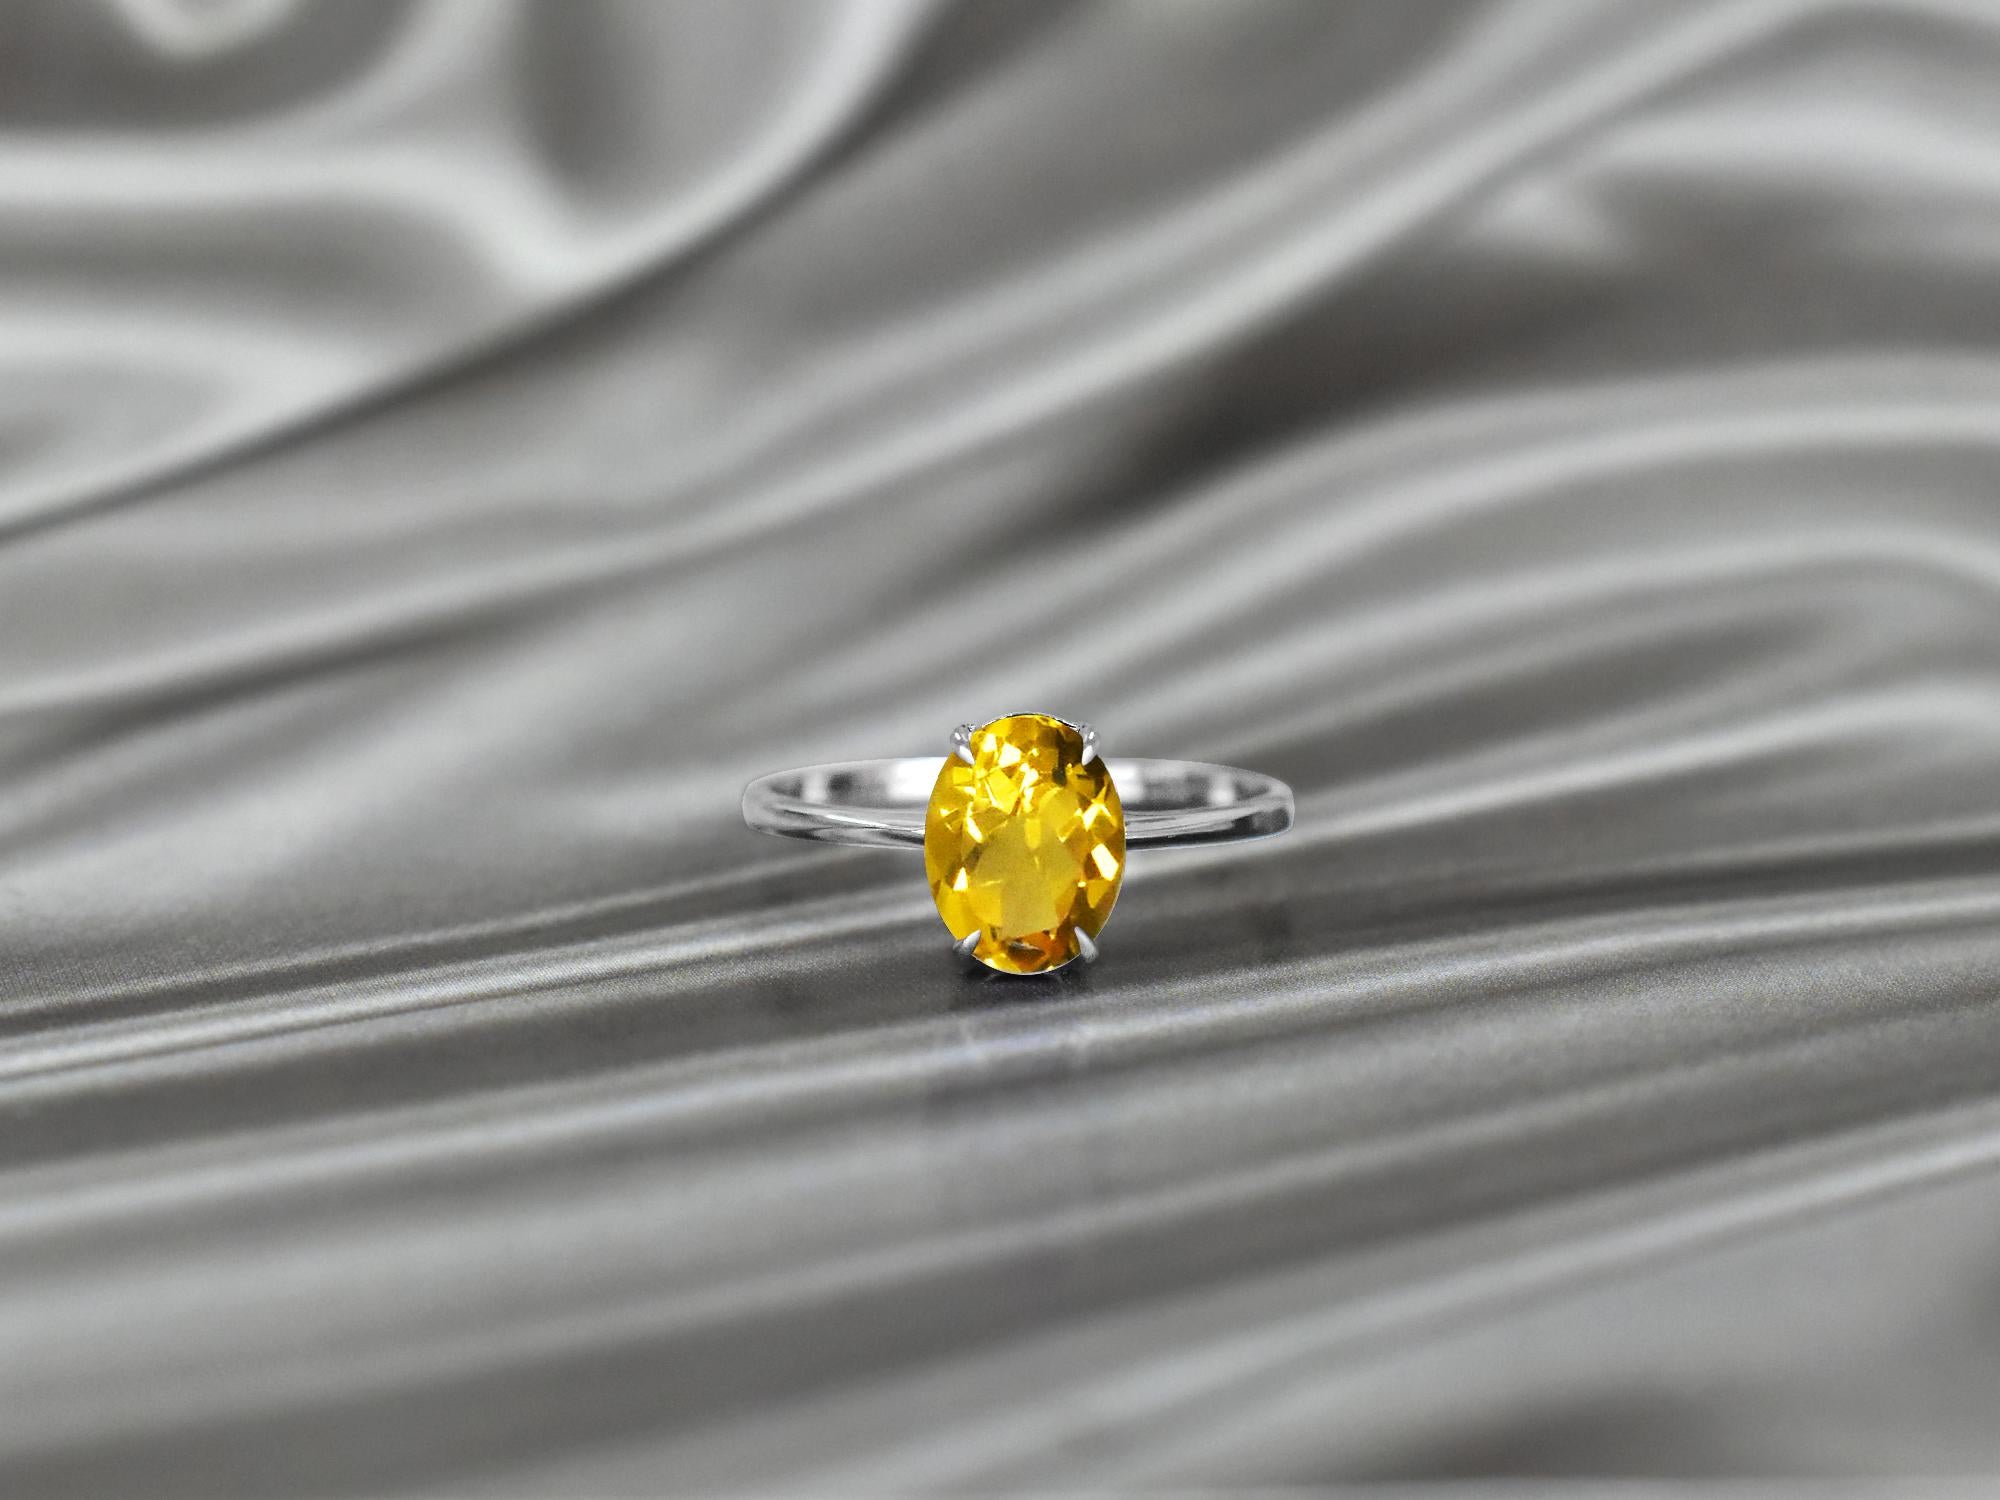 For Sale:  14k Gold Oval Gemstone 9x7 mm Oval Cut Gemstone Ring Gemstone Engagement Ring 6